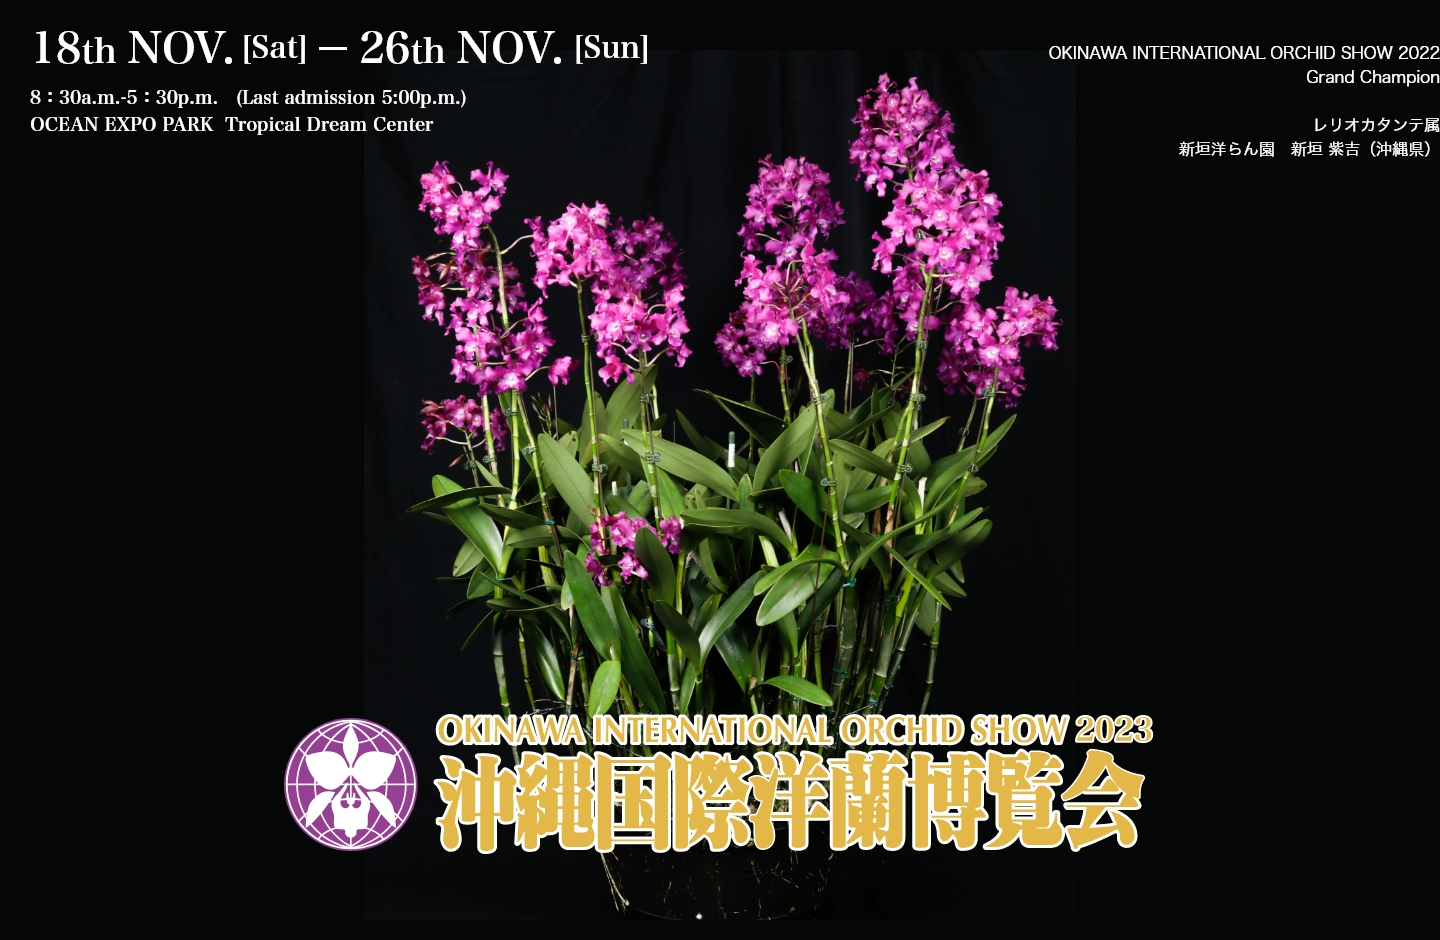 OKINAWA INTERNATIONAL ORCHID SHOW